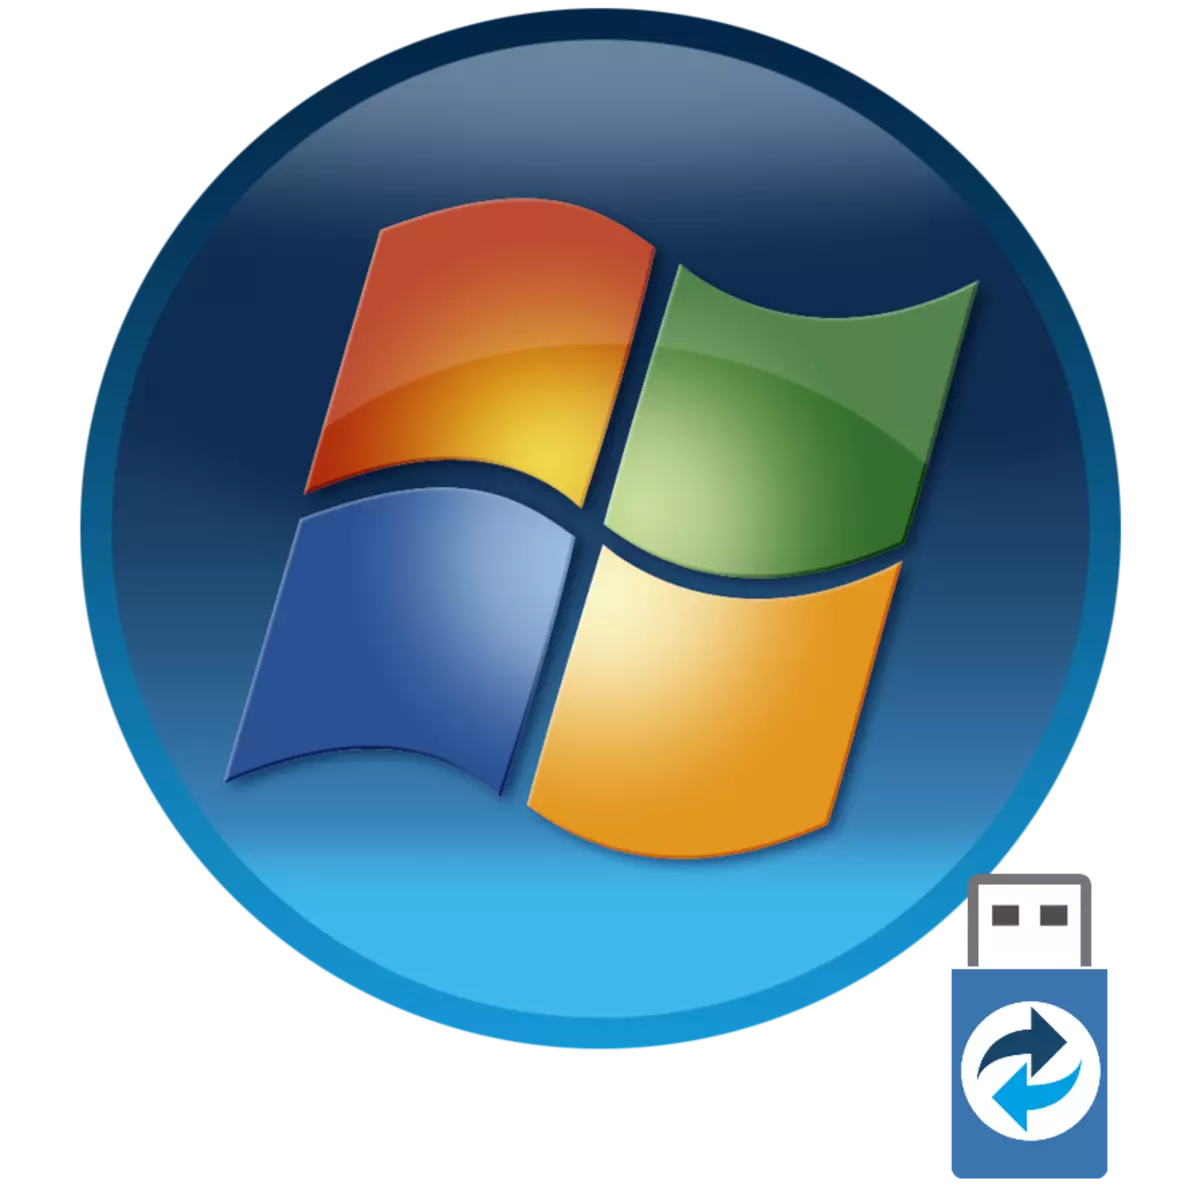 Download Windows 7 bootable USB drive